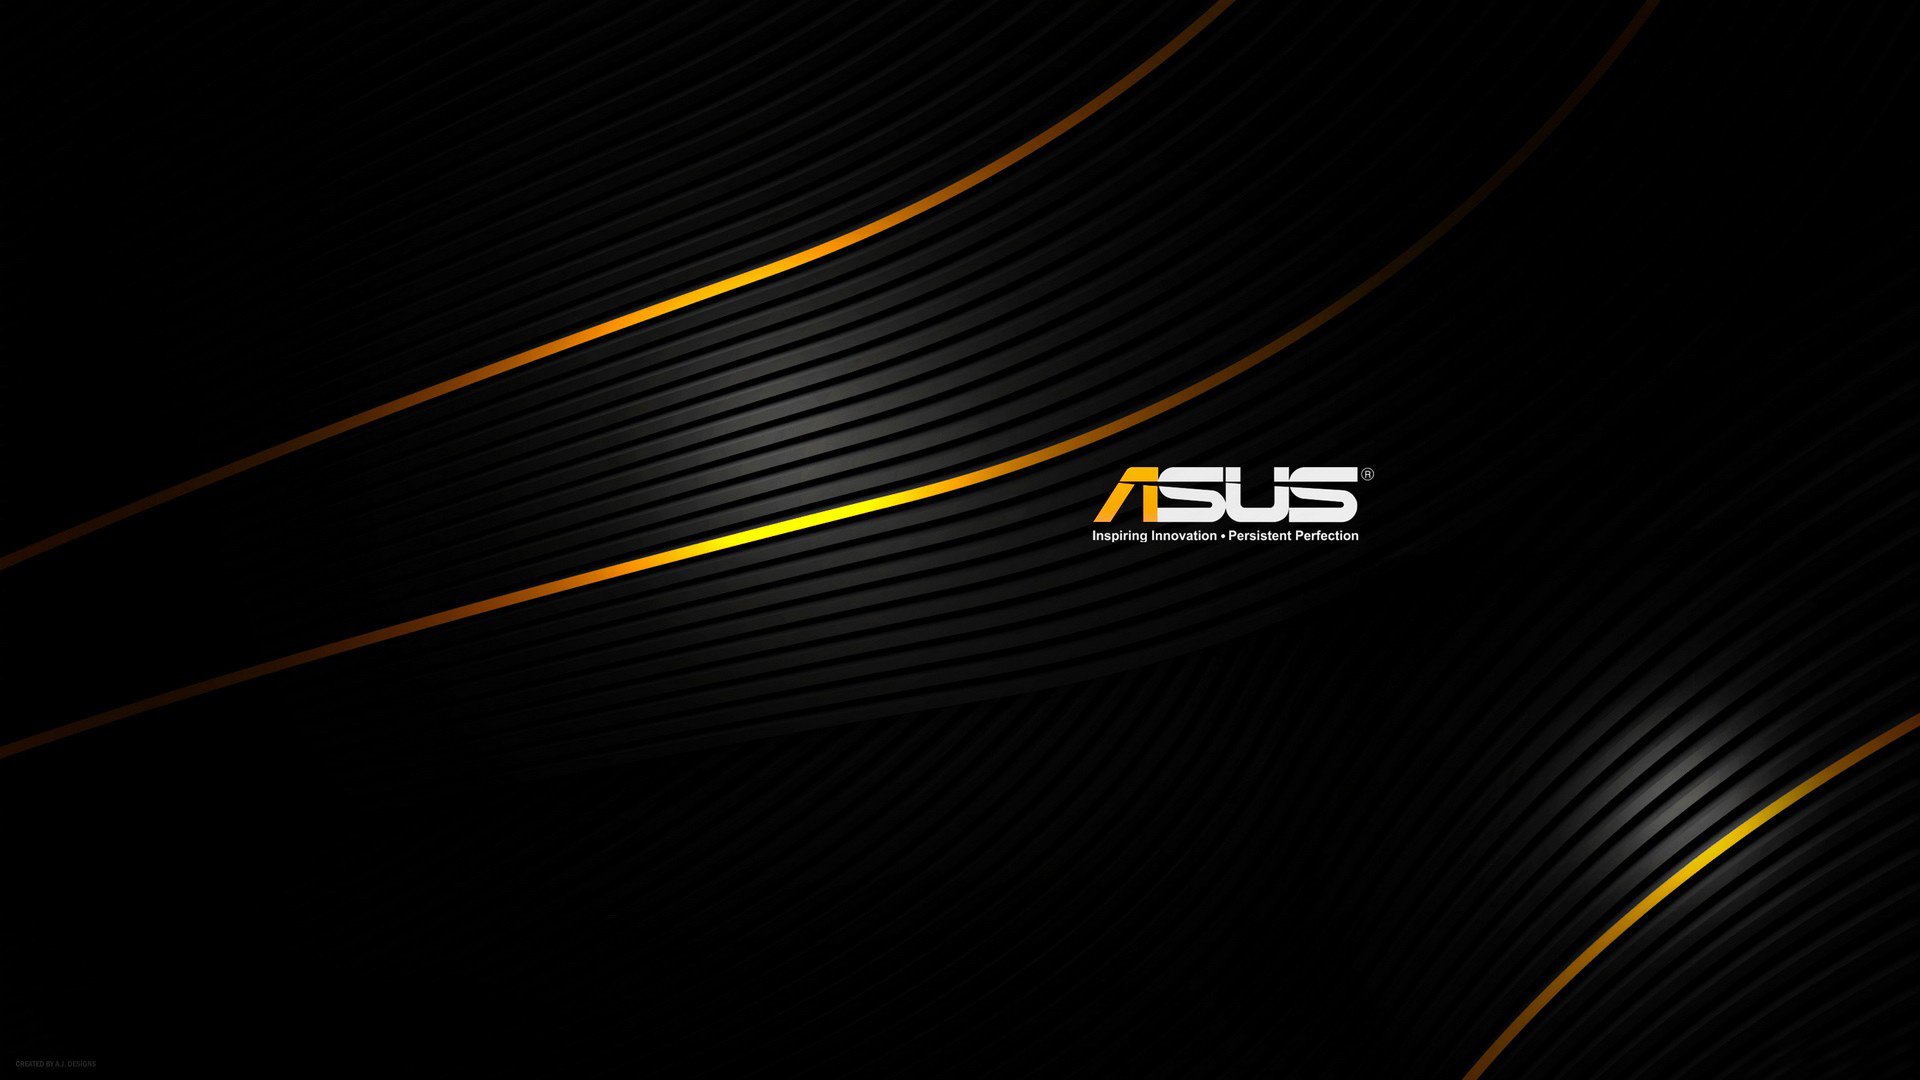 ASUS logo on a black background